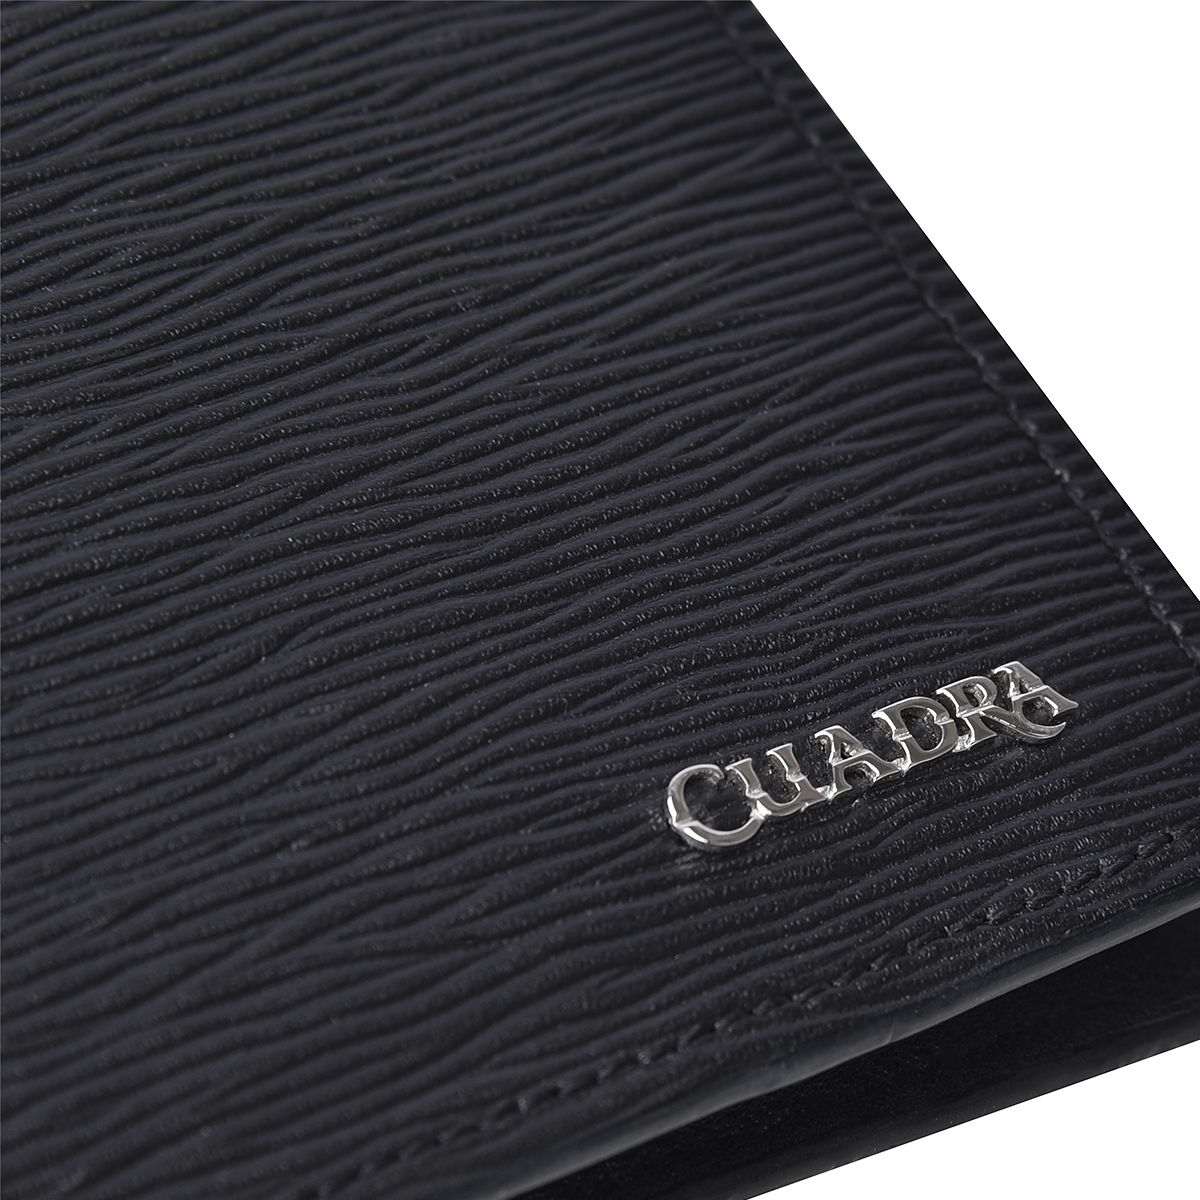 B3042RS - Cuadra black classic leather bi fold wallet for men-Kuet.us